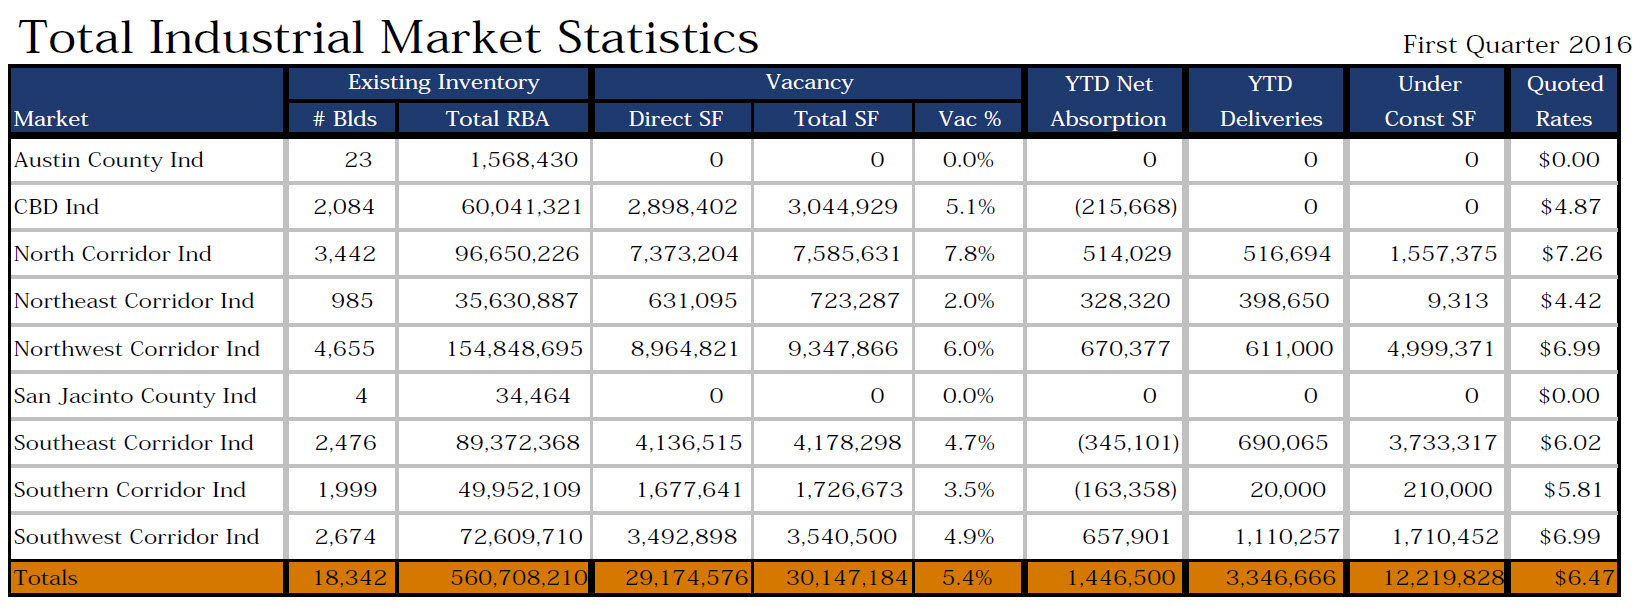 Copy of Total Industrial Market Statistics